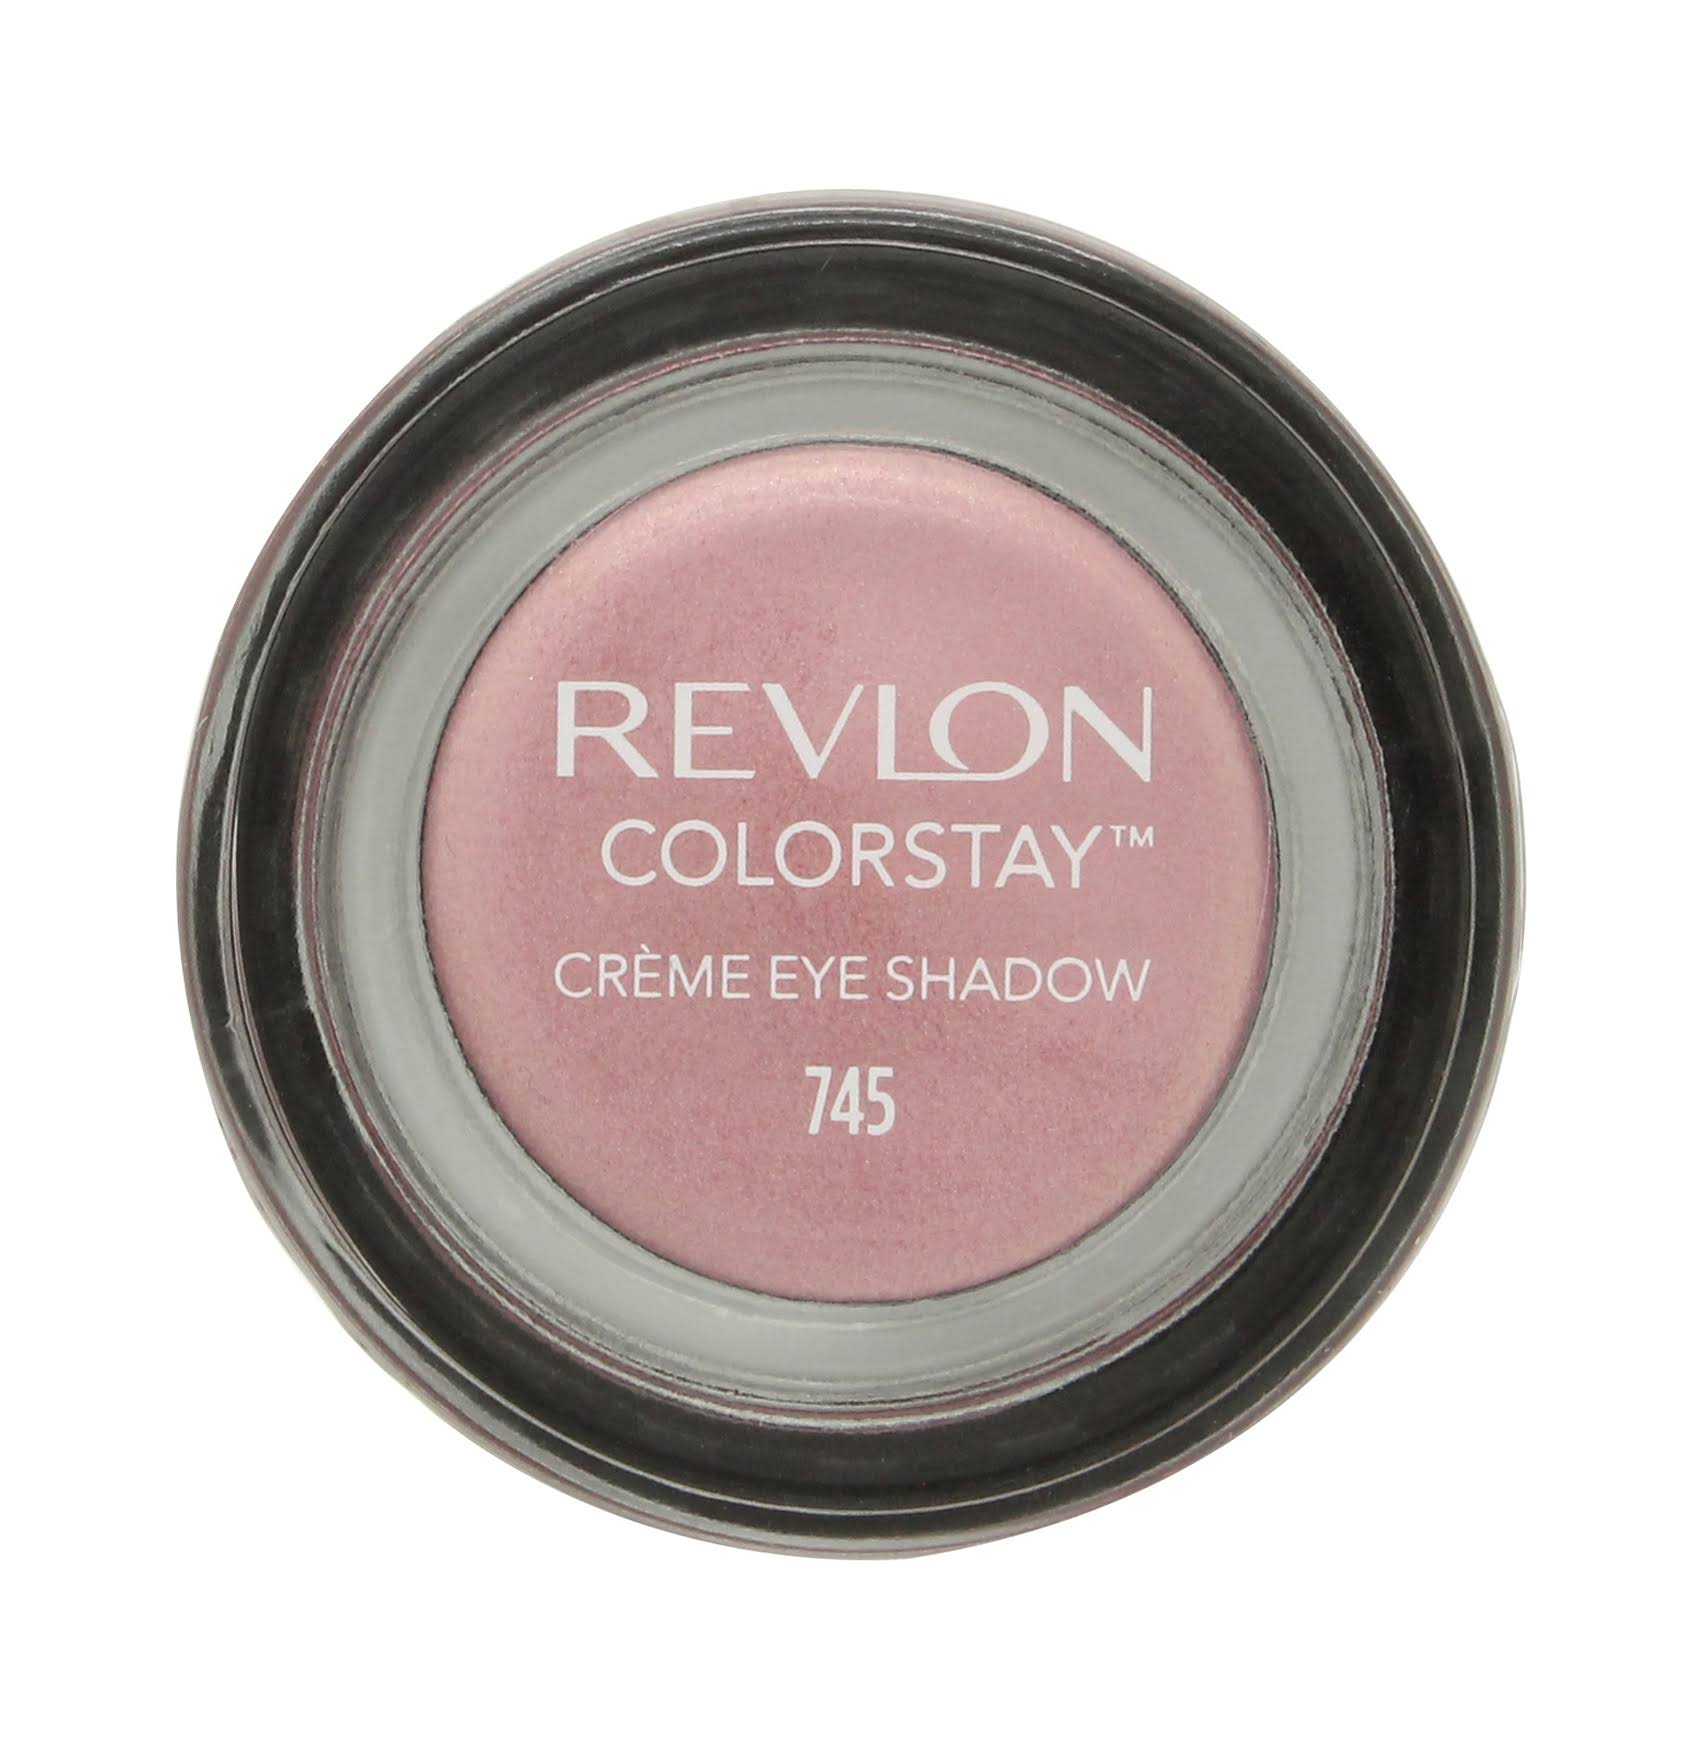 Revlon Colorstay Creme Eye Shadow - 735 Pistachio